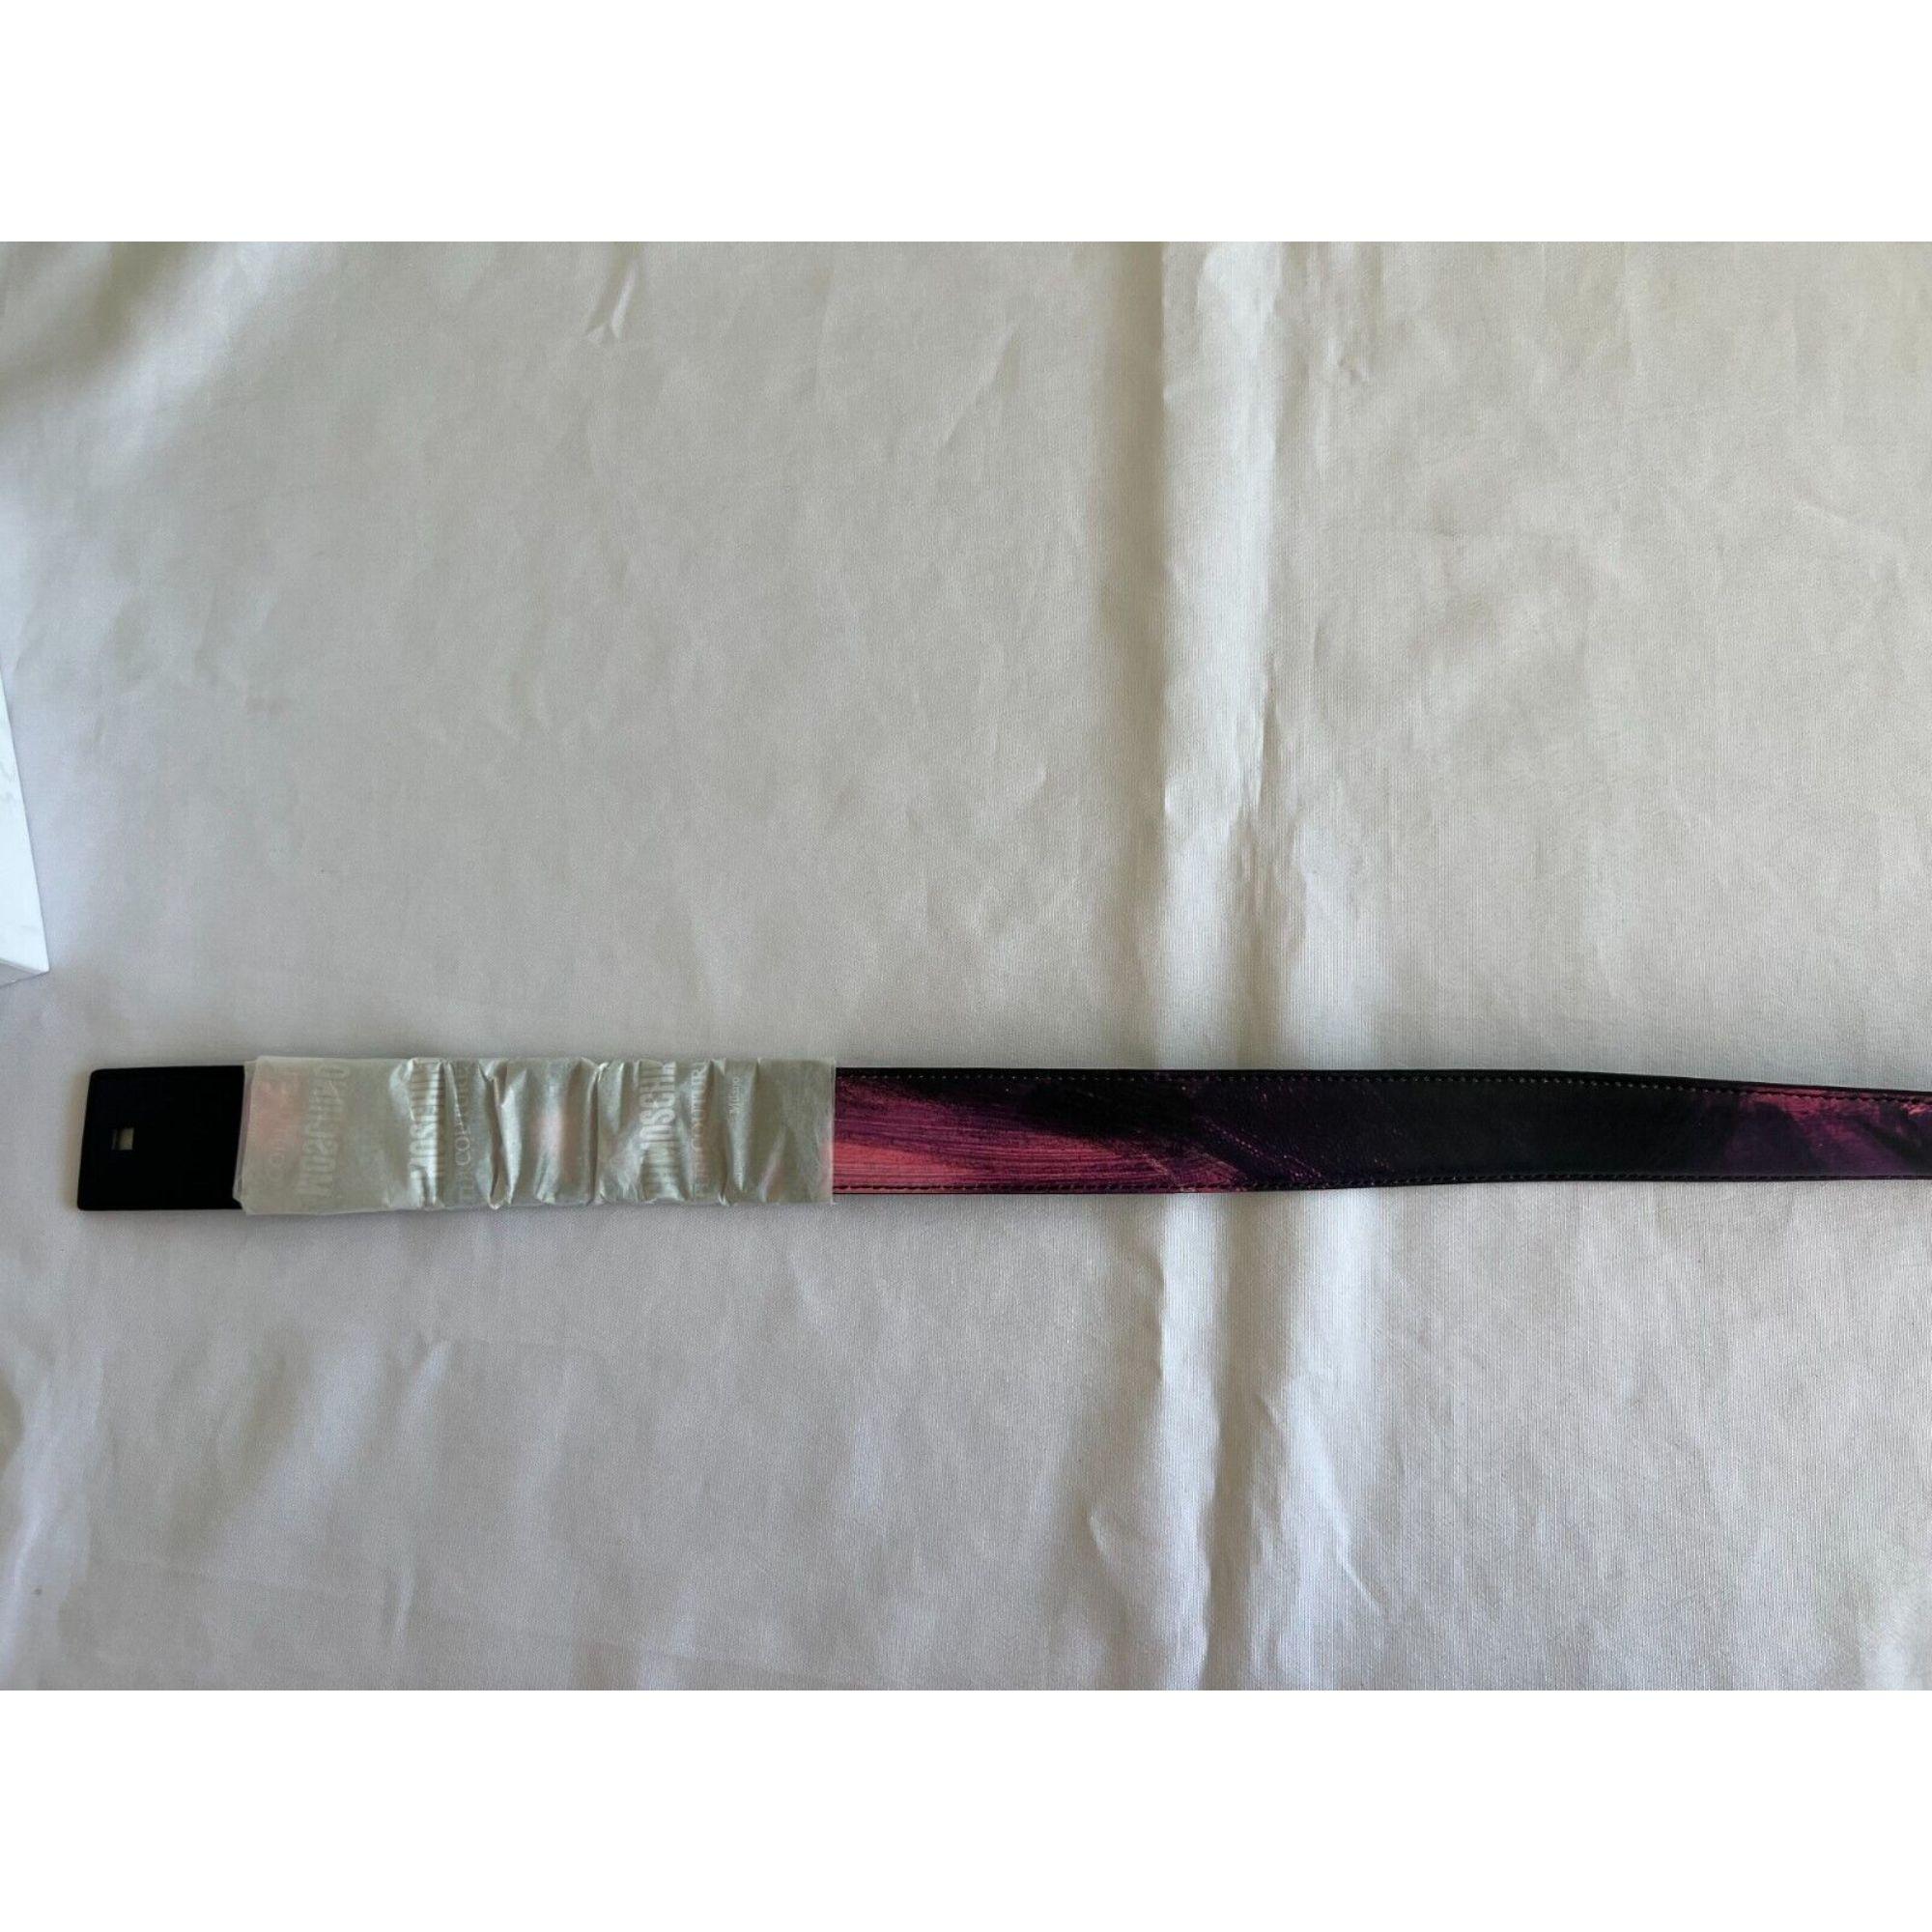 SS22 Moschino Couture Brushstroke Purple Black Leather Logo Belt by Jeremy Scott For Sale 6